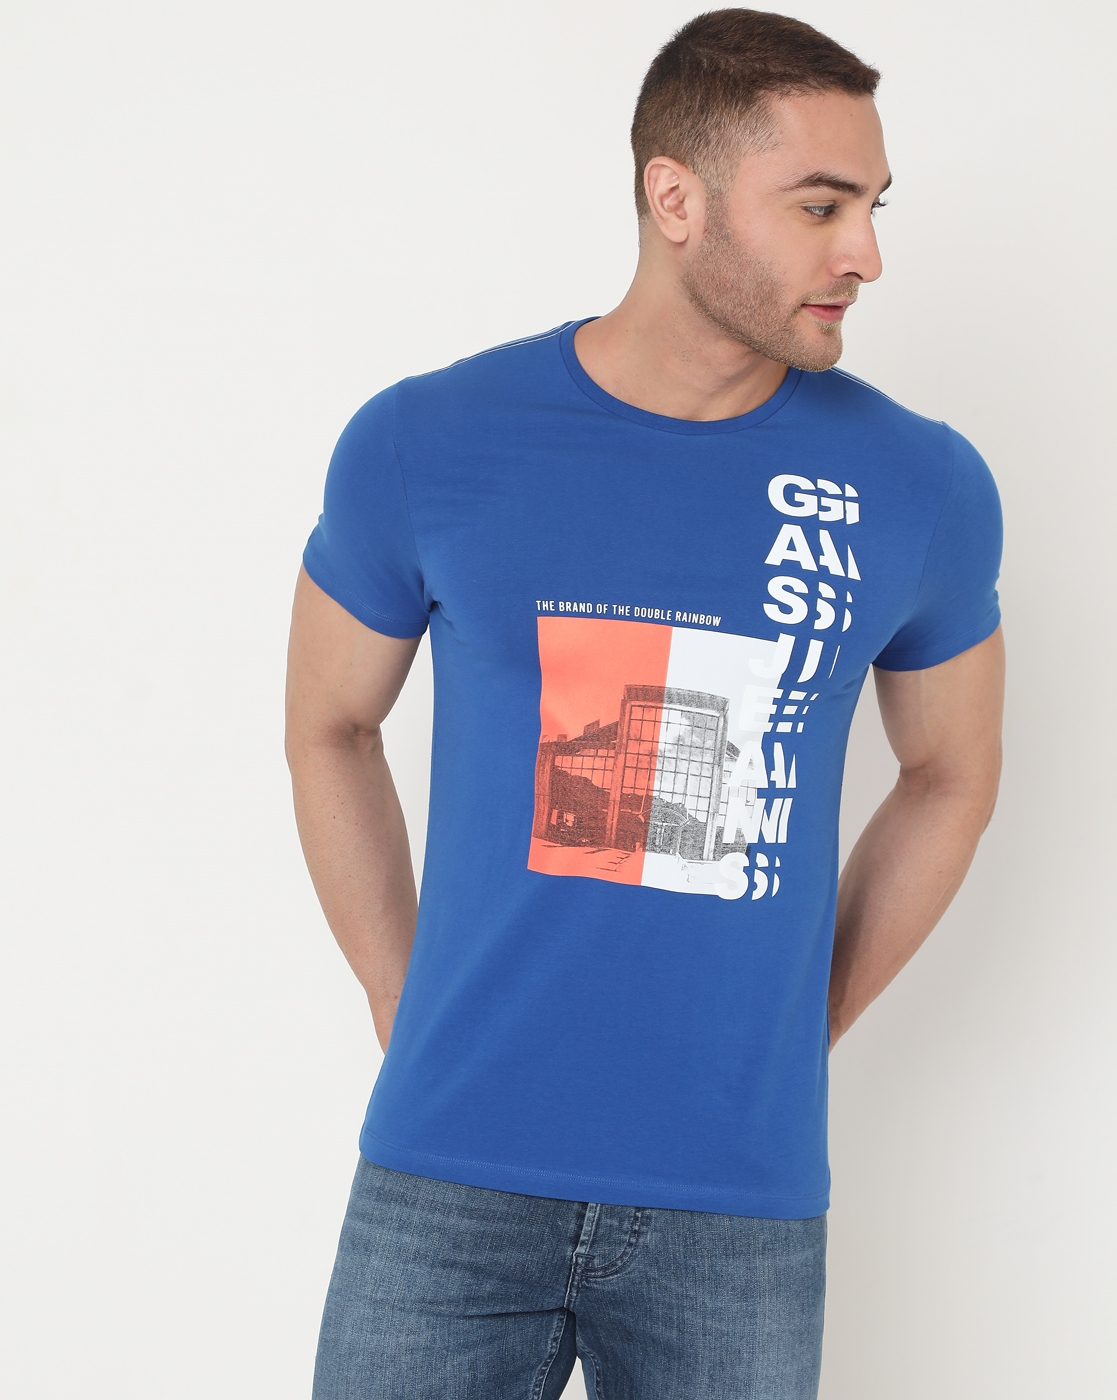 Men's Scuba Hq Ec In Slim Fit Printed Tshirt